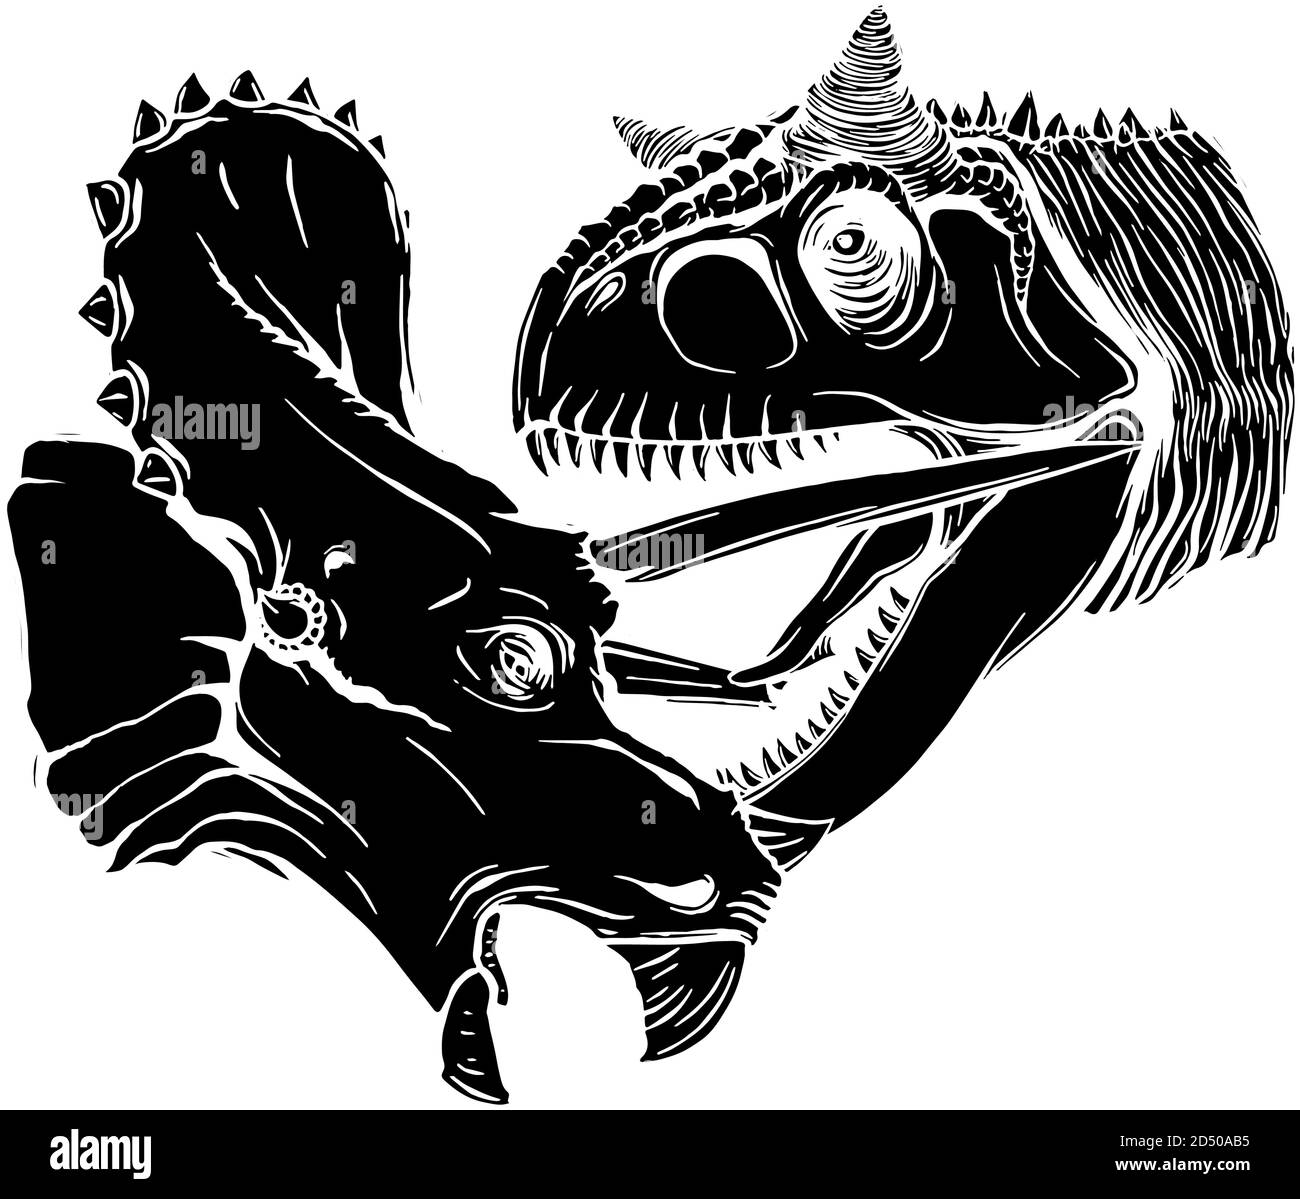 T Rex Versus Triceratops illustration black silhouette tyrannosaurs rex attacking a triceratops dinosaur Stock Vector